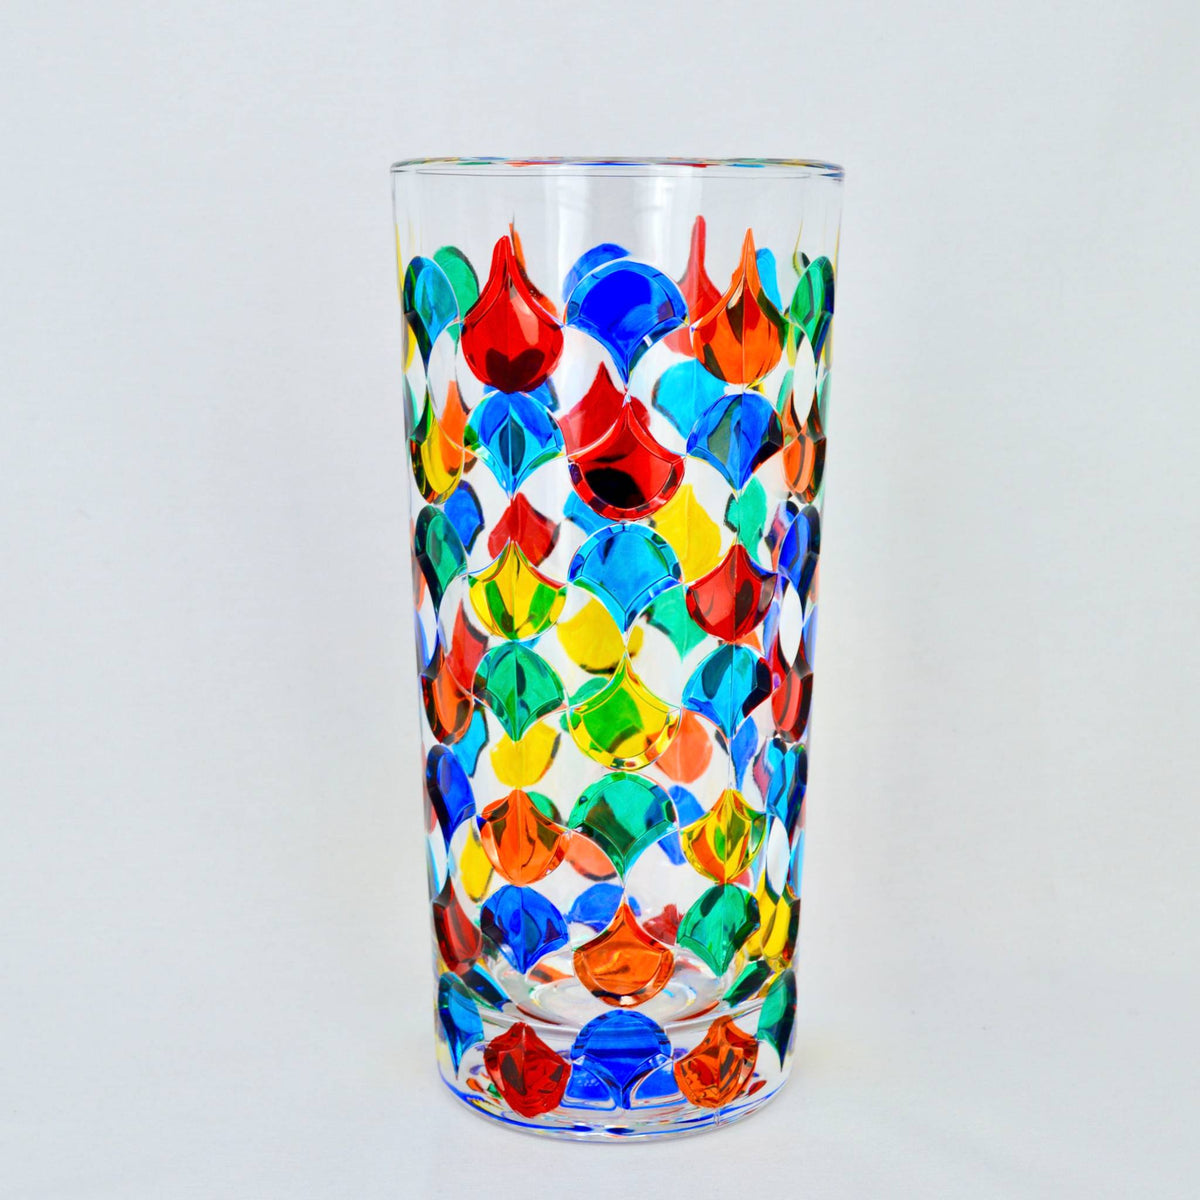 Arabesque Luxury Vase, Hand Painted Crystal, Made in Italy - My Italian Decor